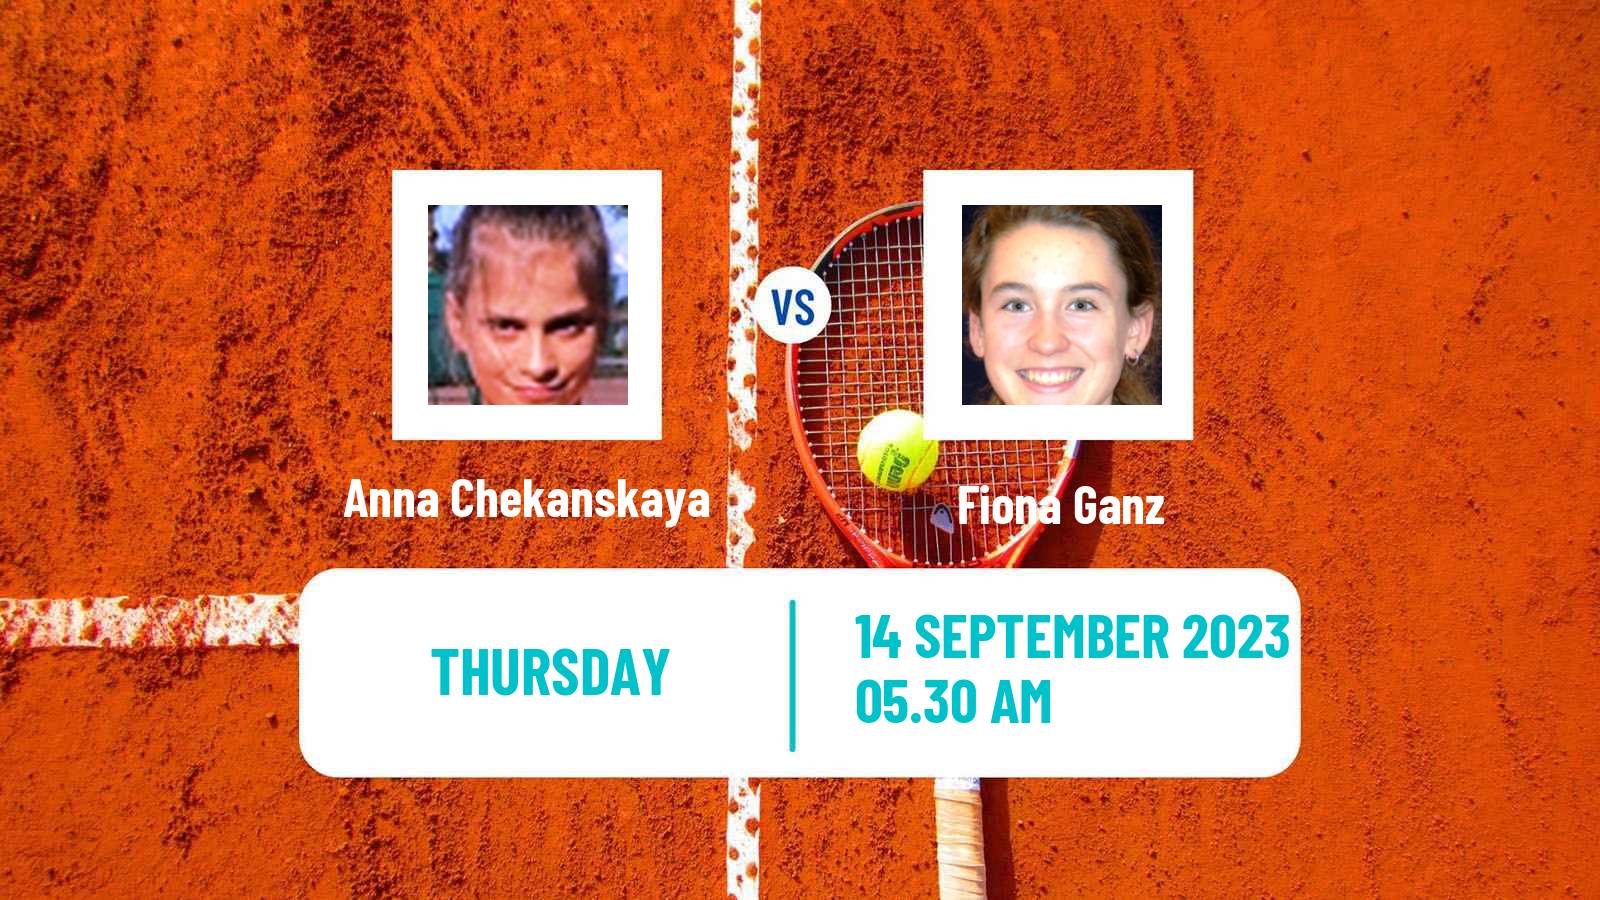 Tennis ITF W15 Dijon Women Anna Chekanskaya - Fiona Ganz